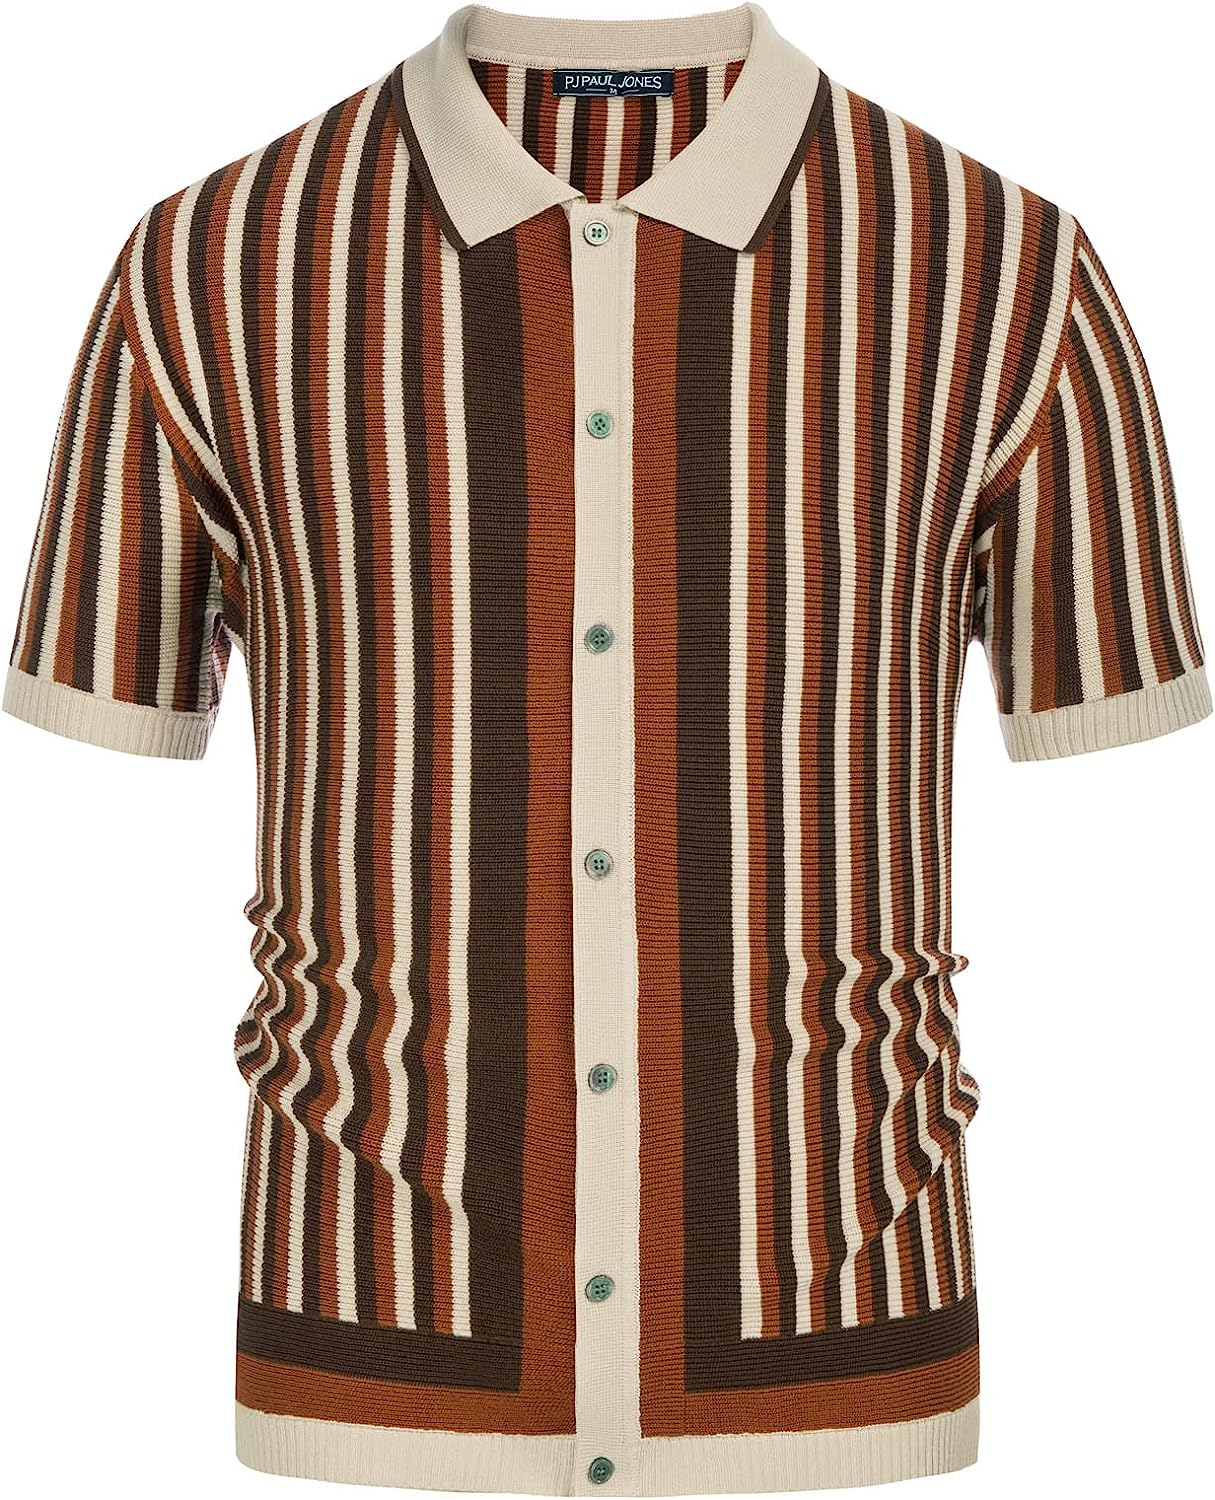 Pj Paul Jones Mens Striped Polo Shirts Breathable Knit Shirt 70s Vintage Shirt Ebay 8674